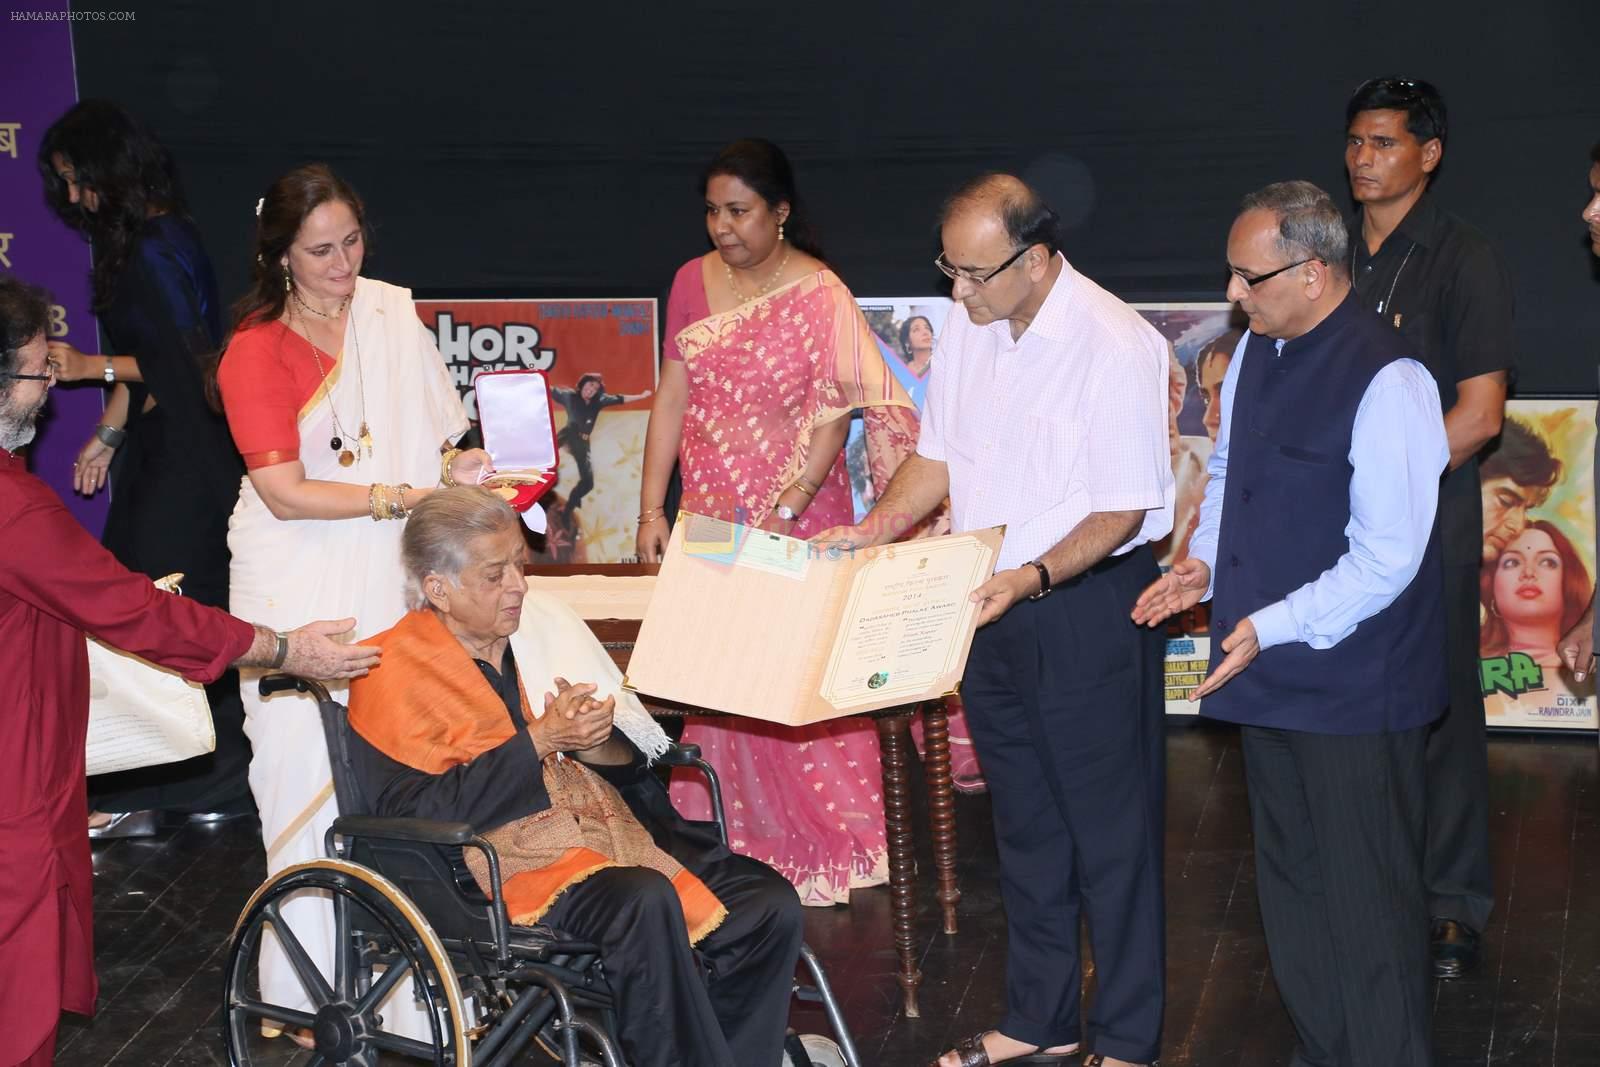 Shashi Kapoor felicitation at Prithvi theatre in Mumbai on 10th May 2015